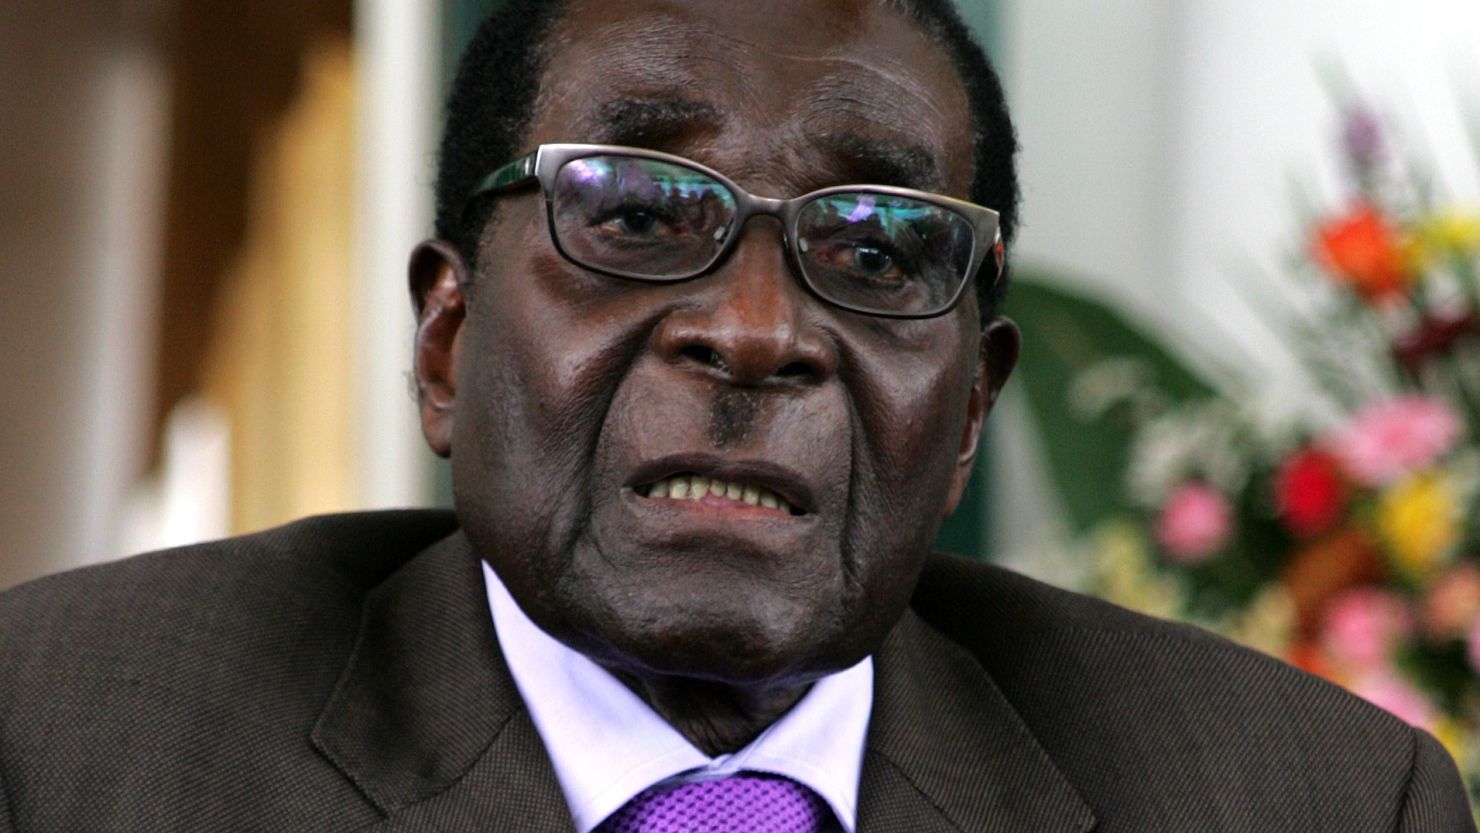 Zimbabwe's President Robert Mugabe has ruled out leaving politics, despite his advanced age.